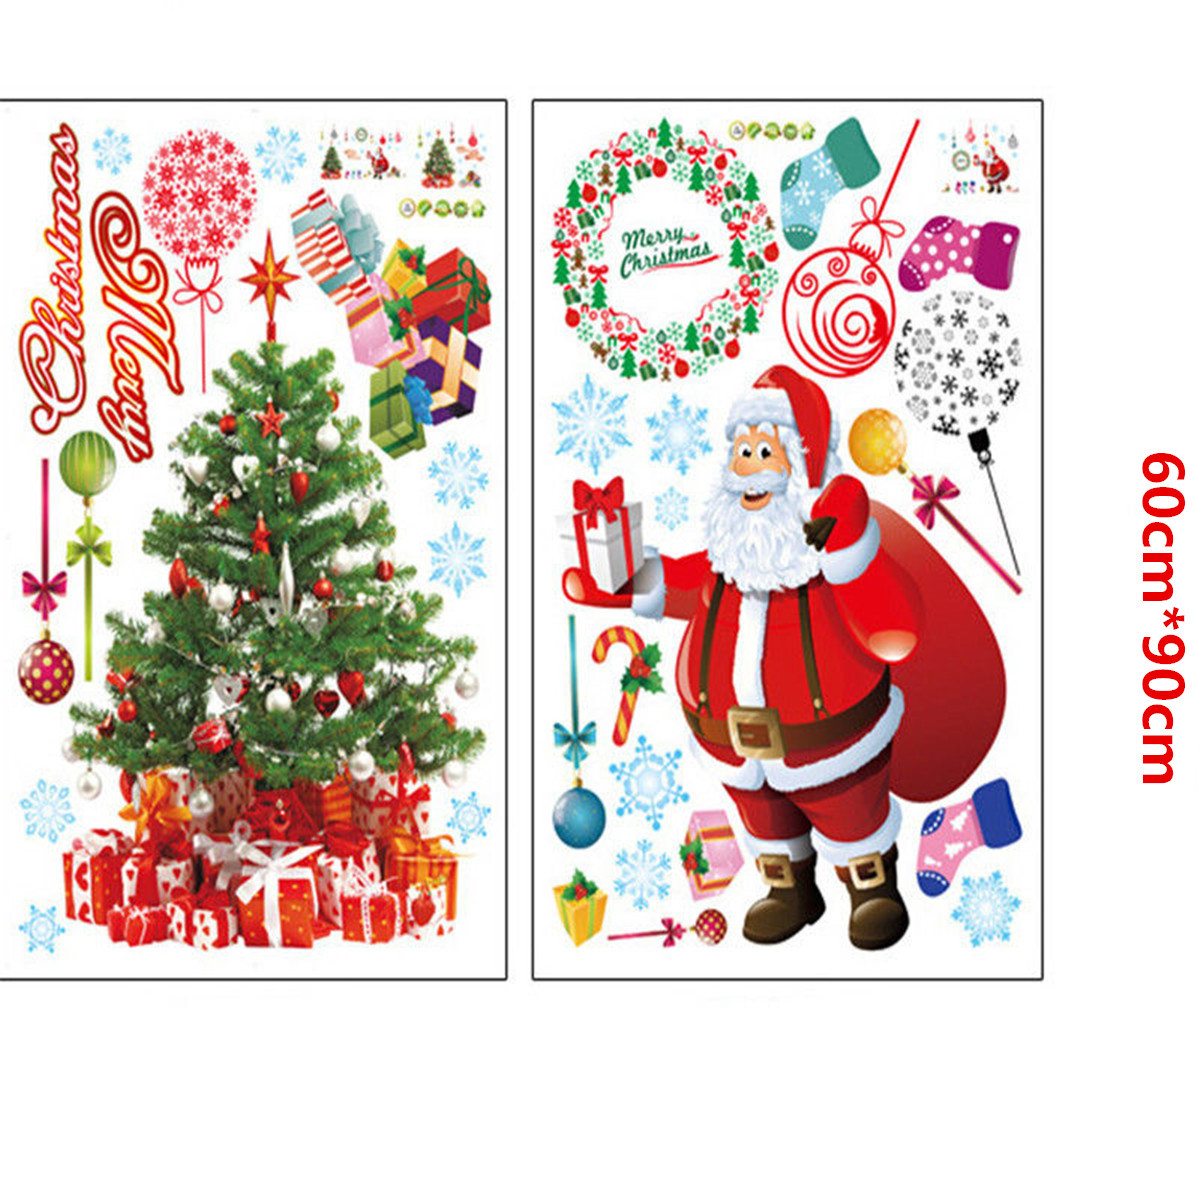 Christmas-Tree-Wall-Sticker-Santa-Claus-Gift-Wall-Art-Window-Home-Decoration-1086741-2